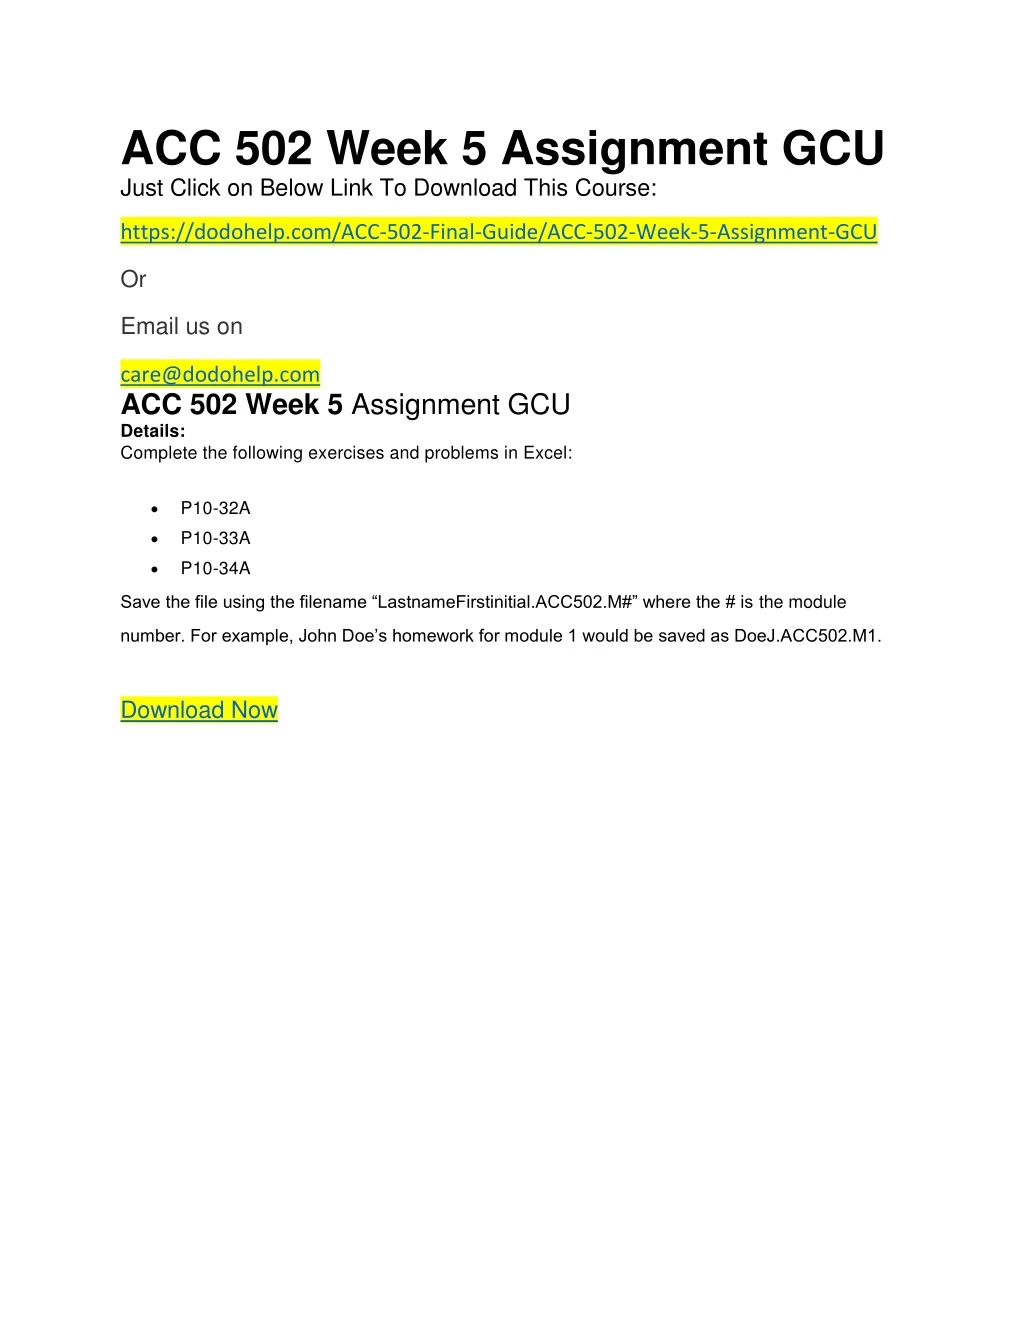 acc 502 week 5 assignment gcu just click on below